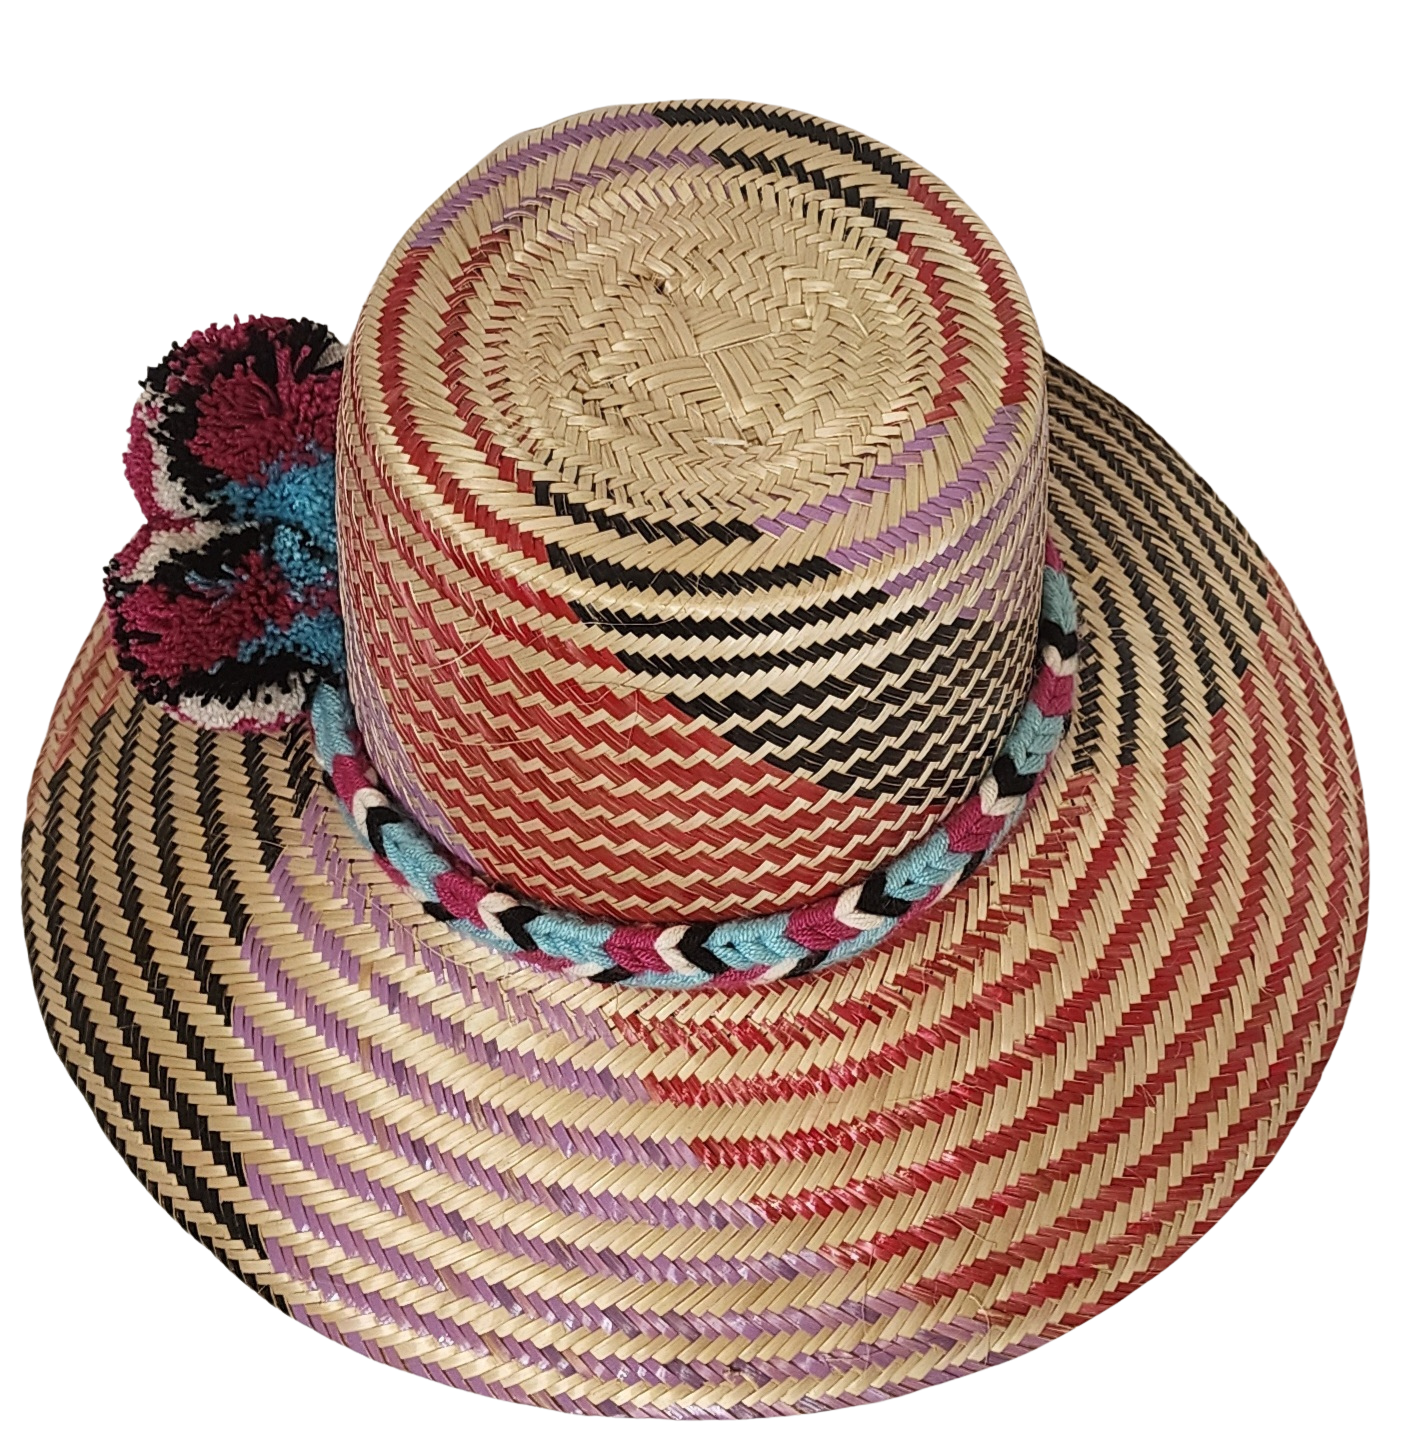 Jordyn Handmade Wayuu Hat - Wuitusu